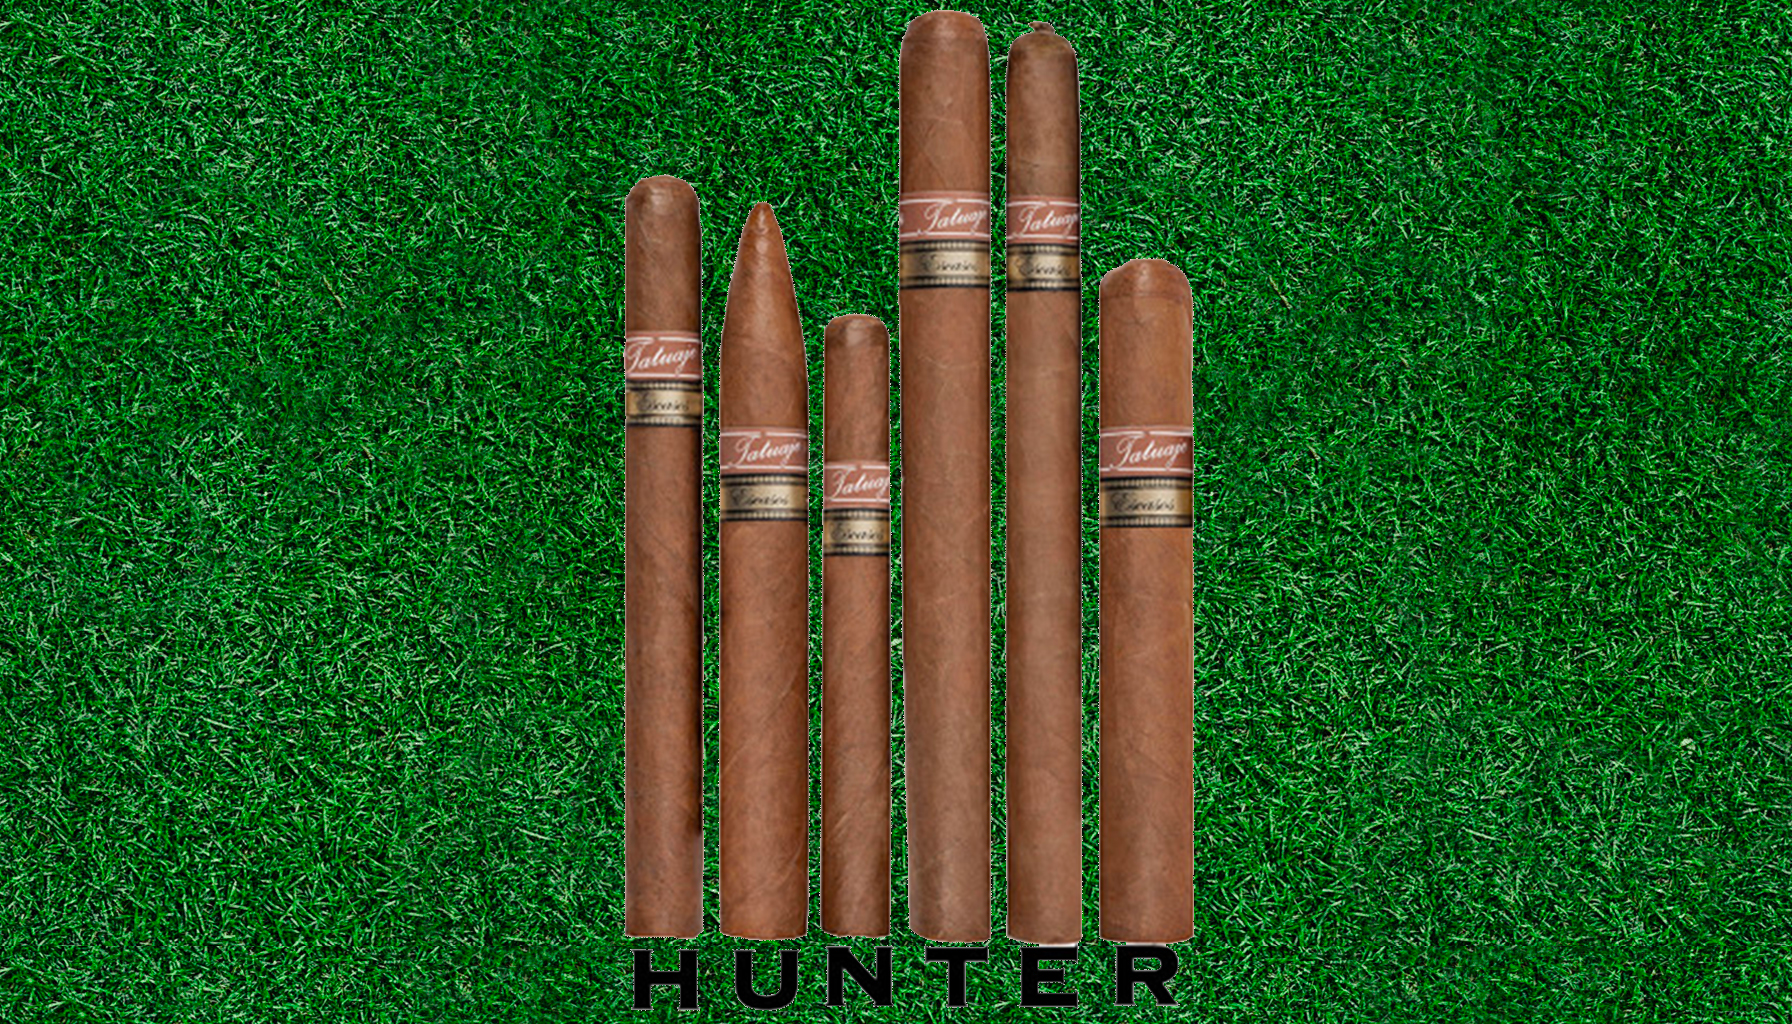 A selection of Tatuaje Escasos cigars. Pete Johnson's dog Hunter.